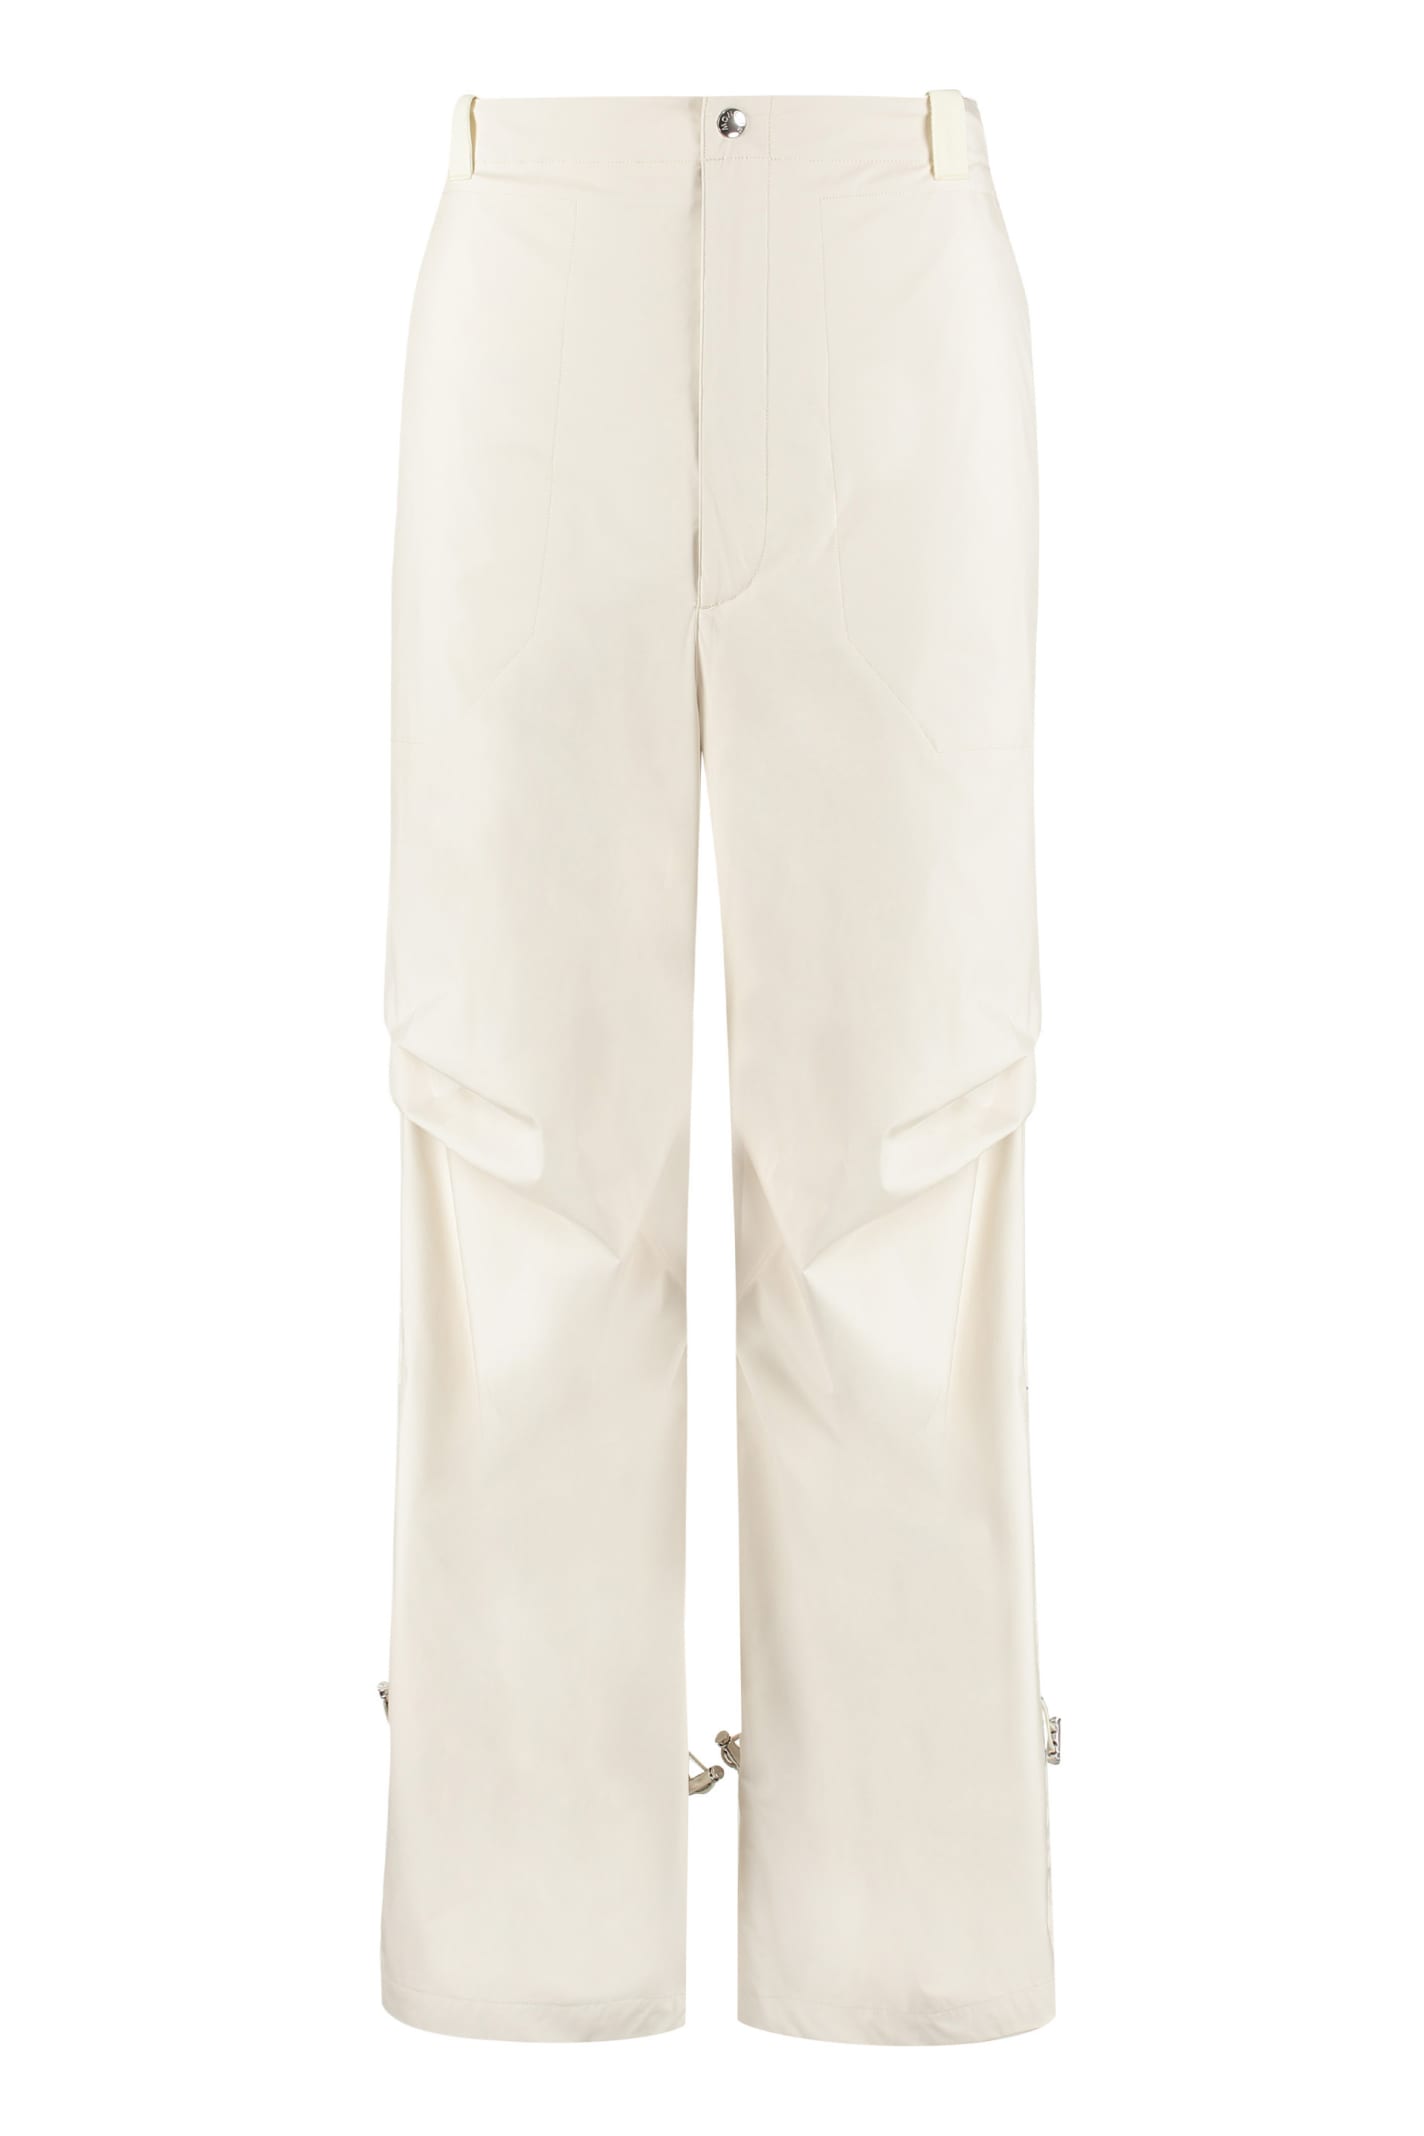 Moncler Genius 2 Moncler 1952 - Technical Fabric Pants